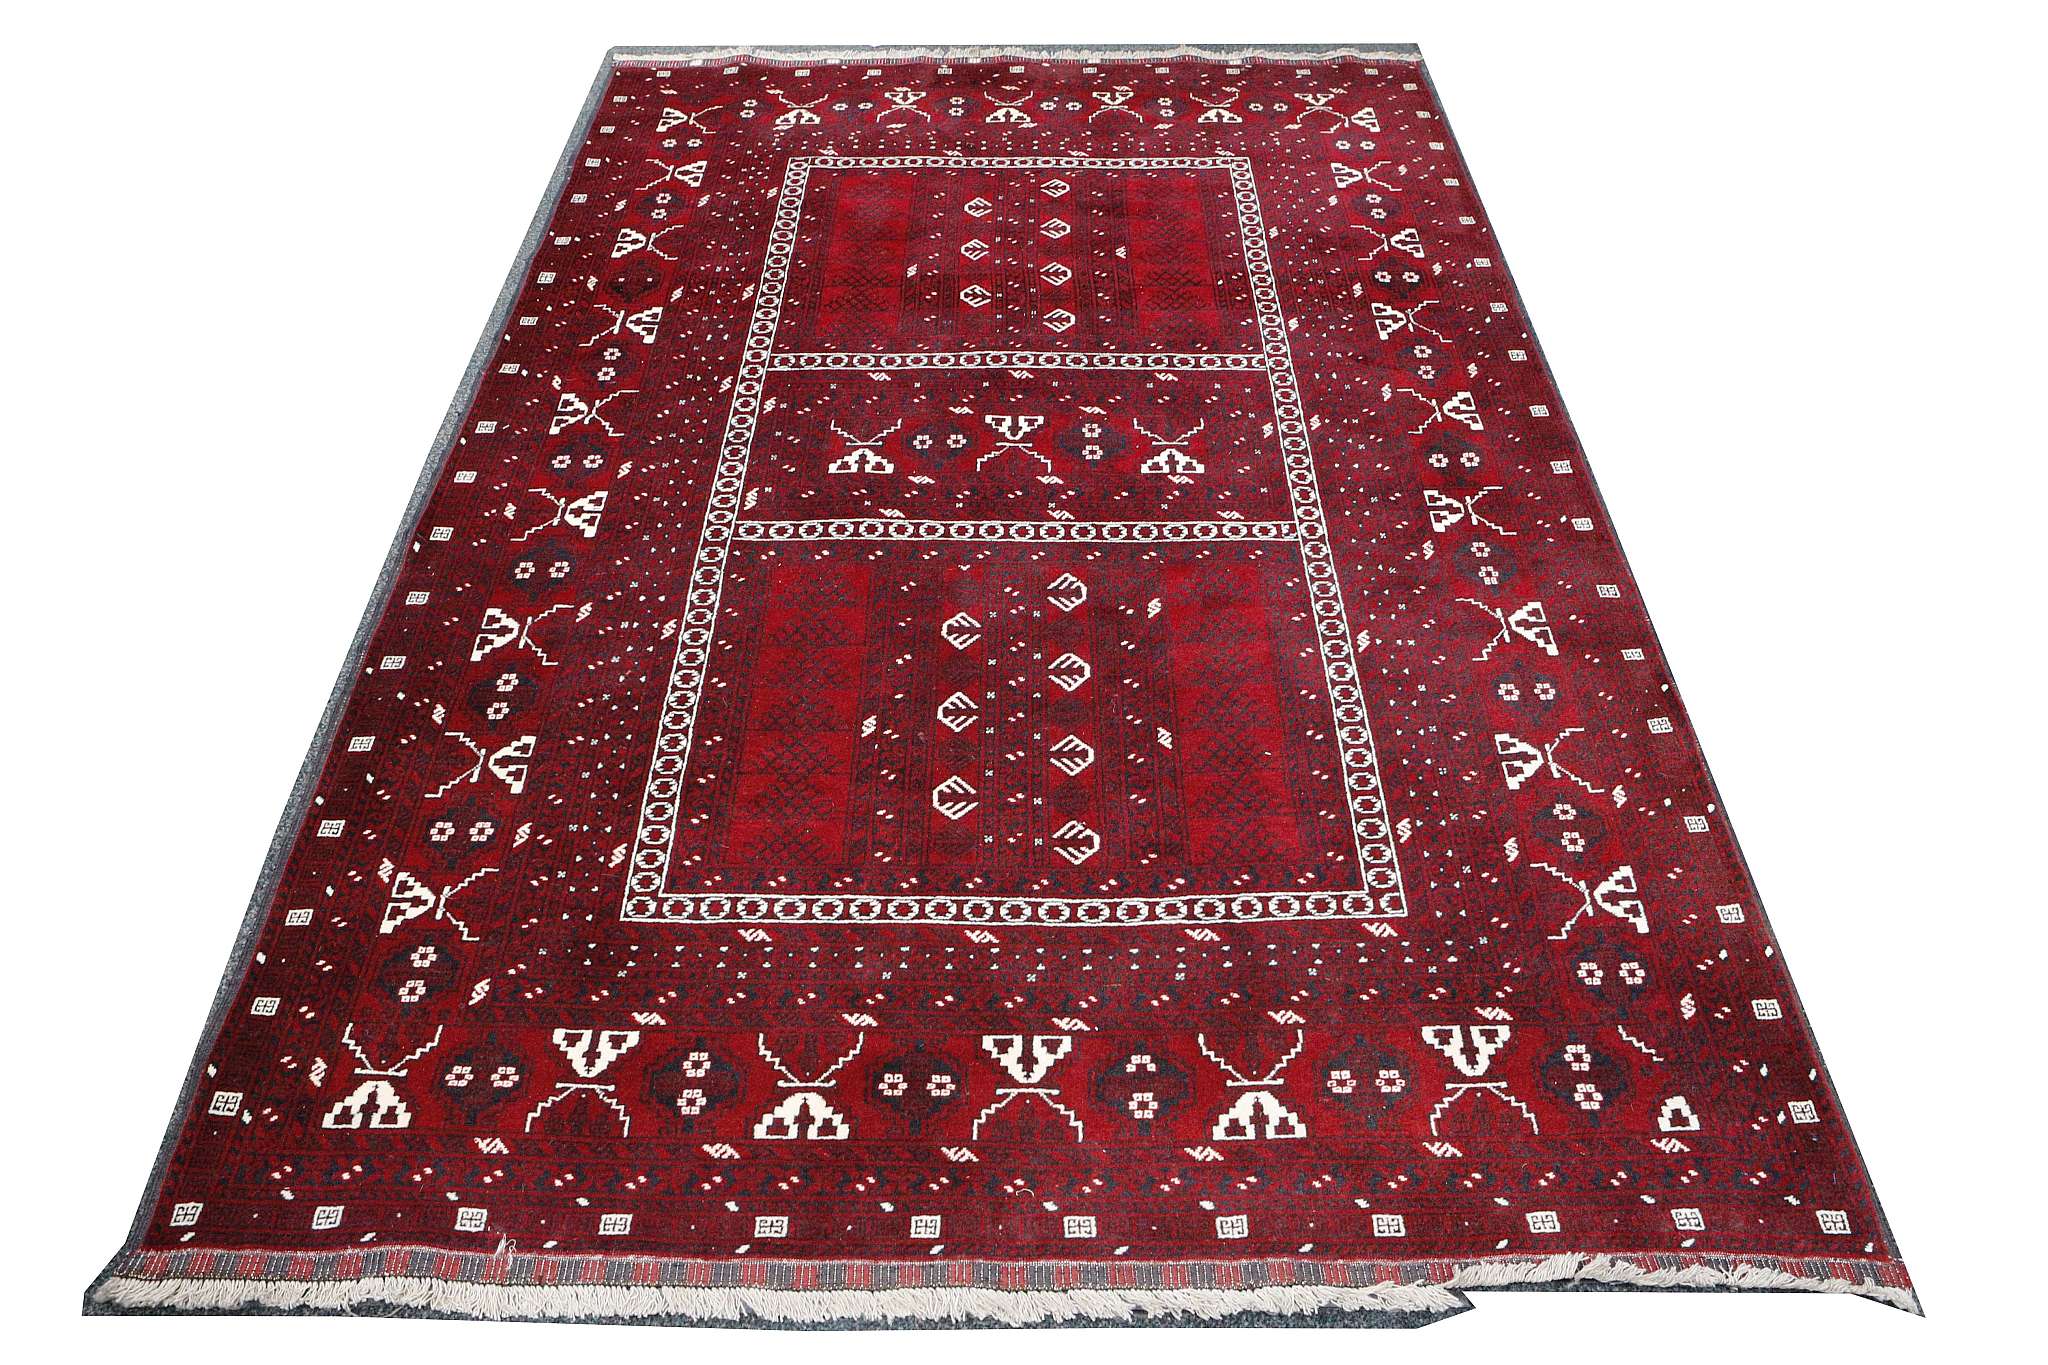 Afghan Hutchlu carpet, 2.36m x 1.58m, condition ra